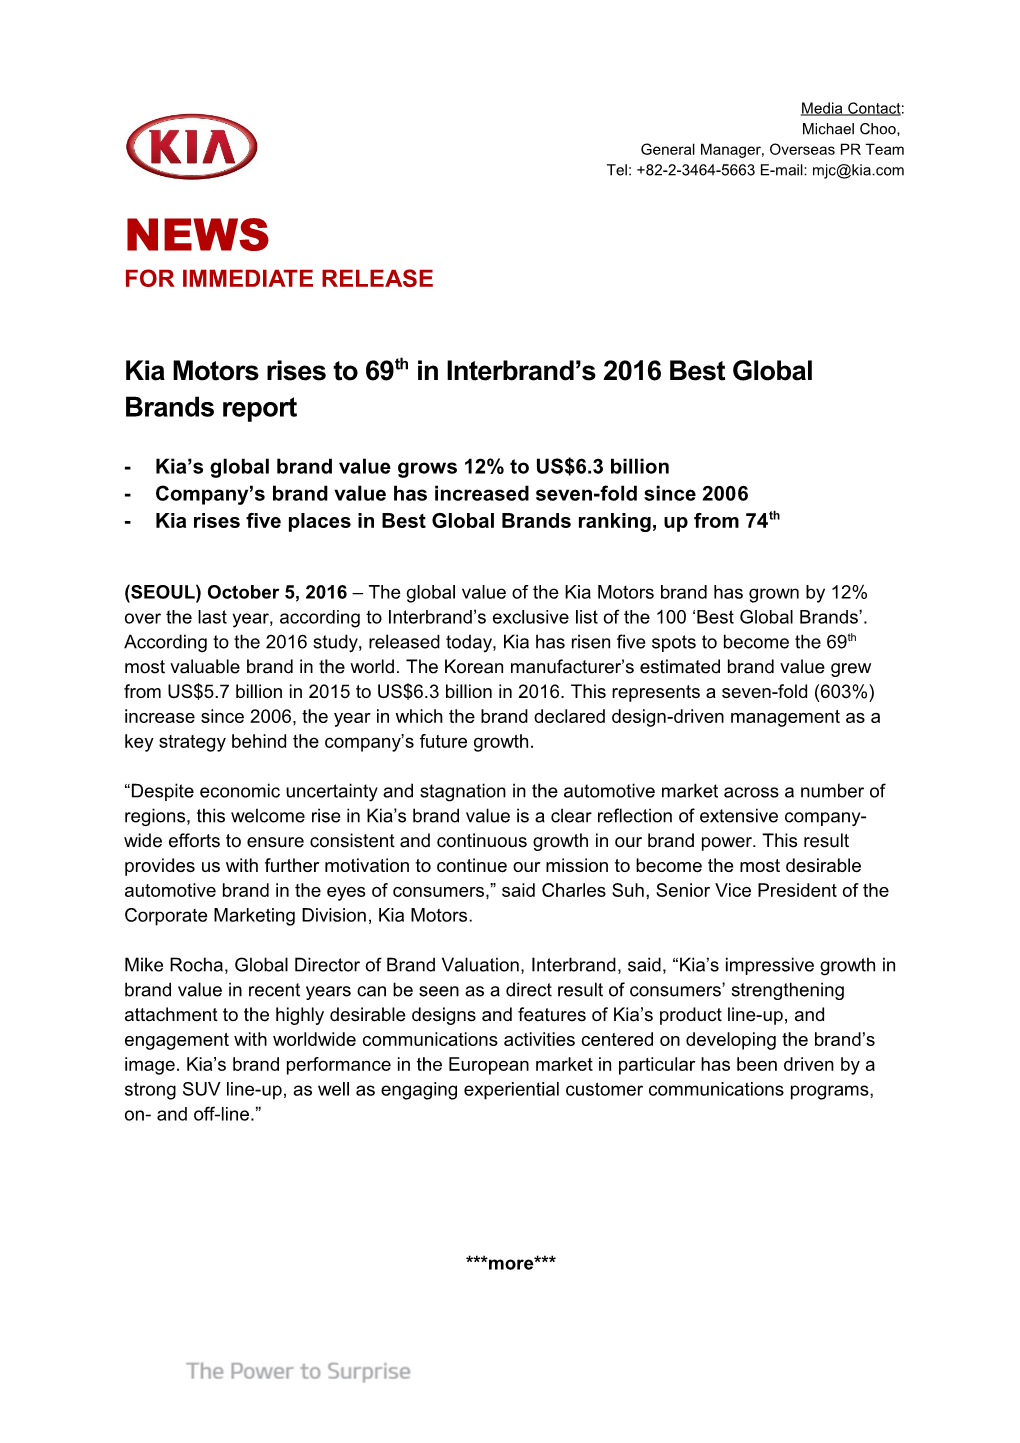 Kia S Global Brand Value Grows 12%To US$6.3 Billion